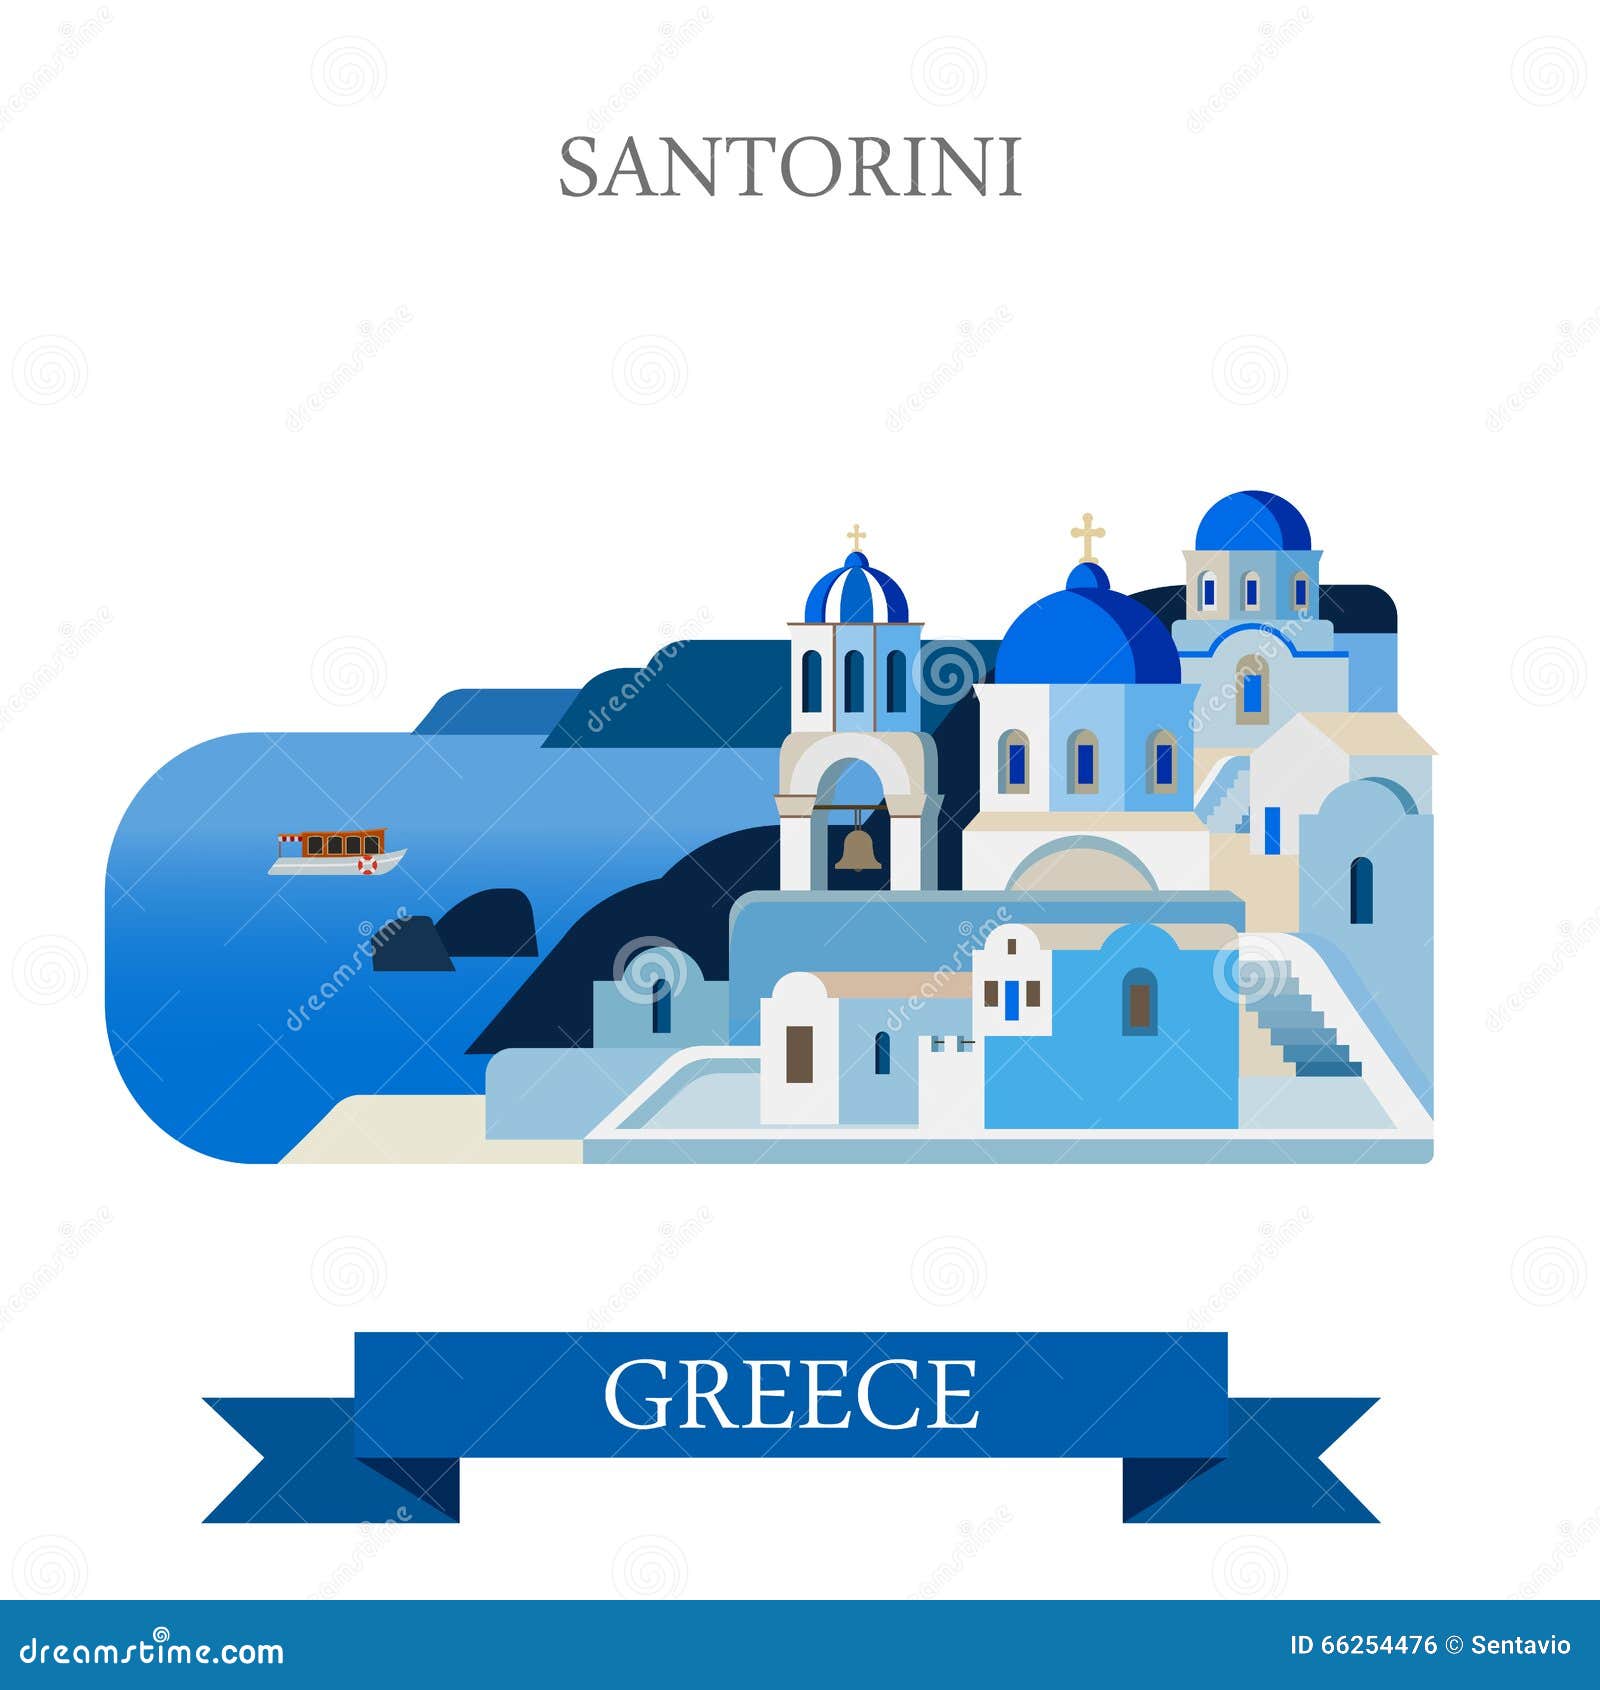 santorini aegean sea islands greece flat  attraction sight